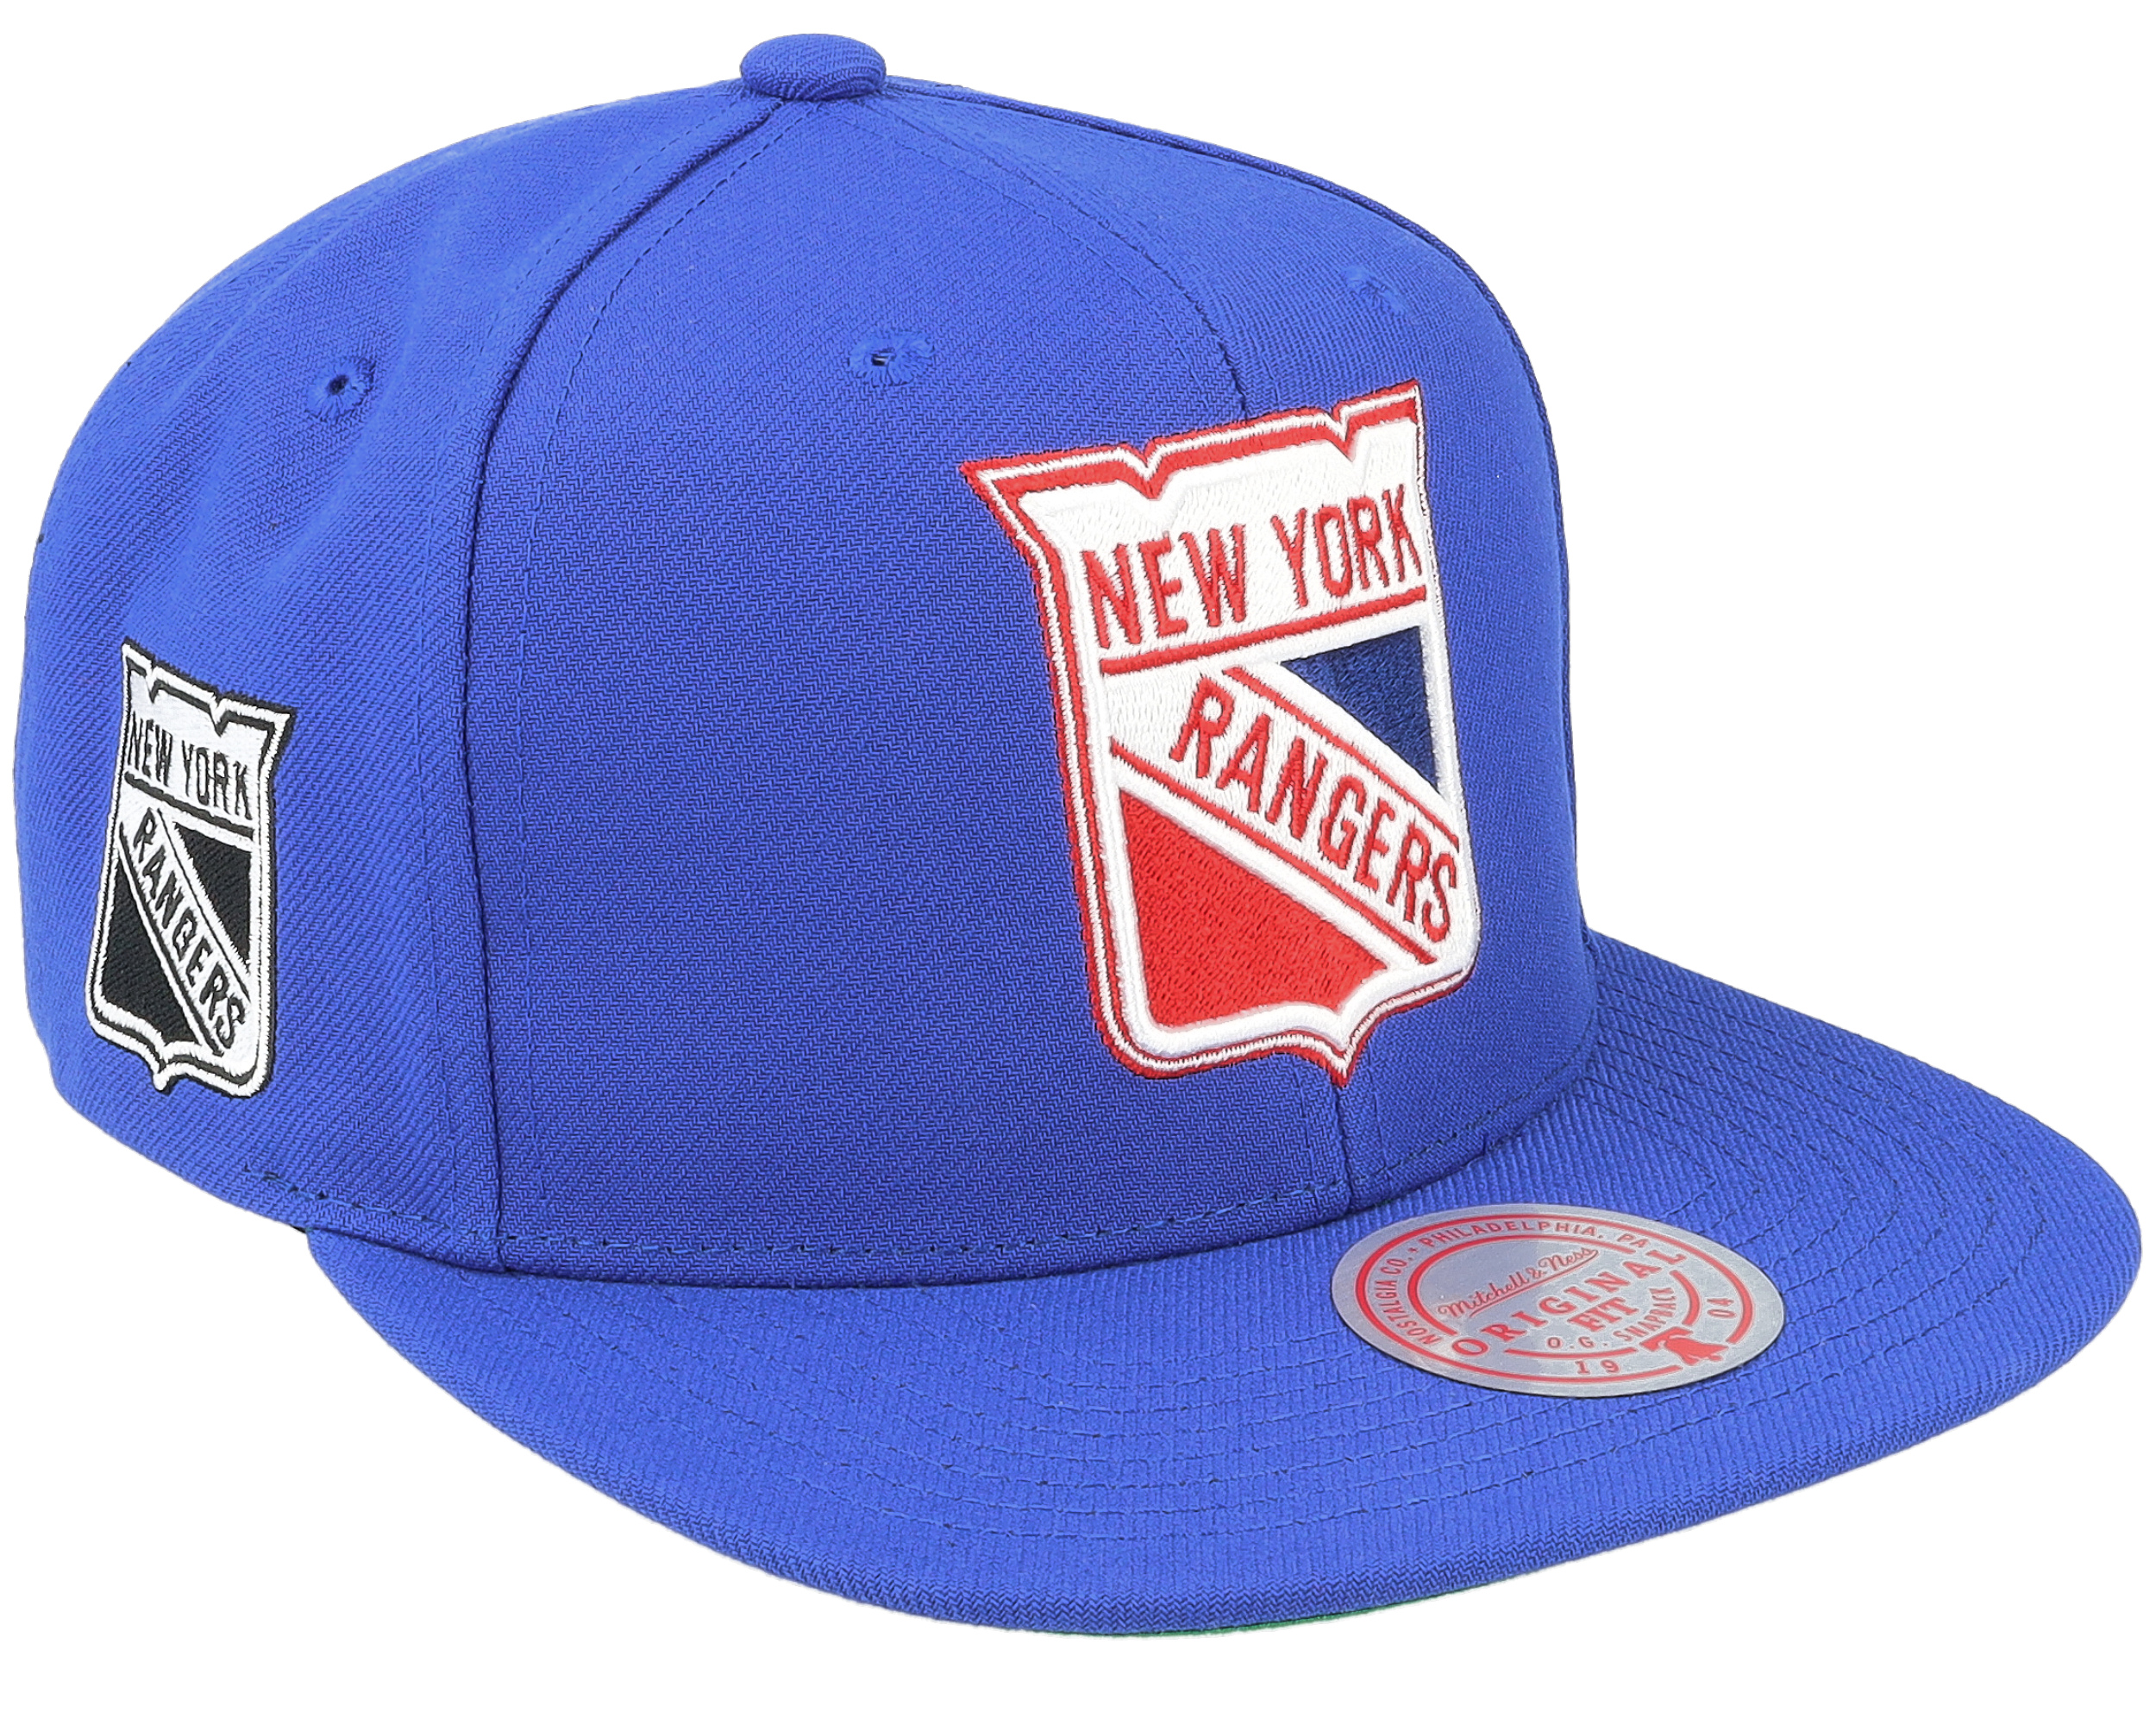 New York Rangers blue hat